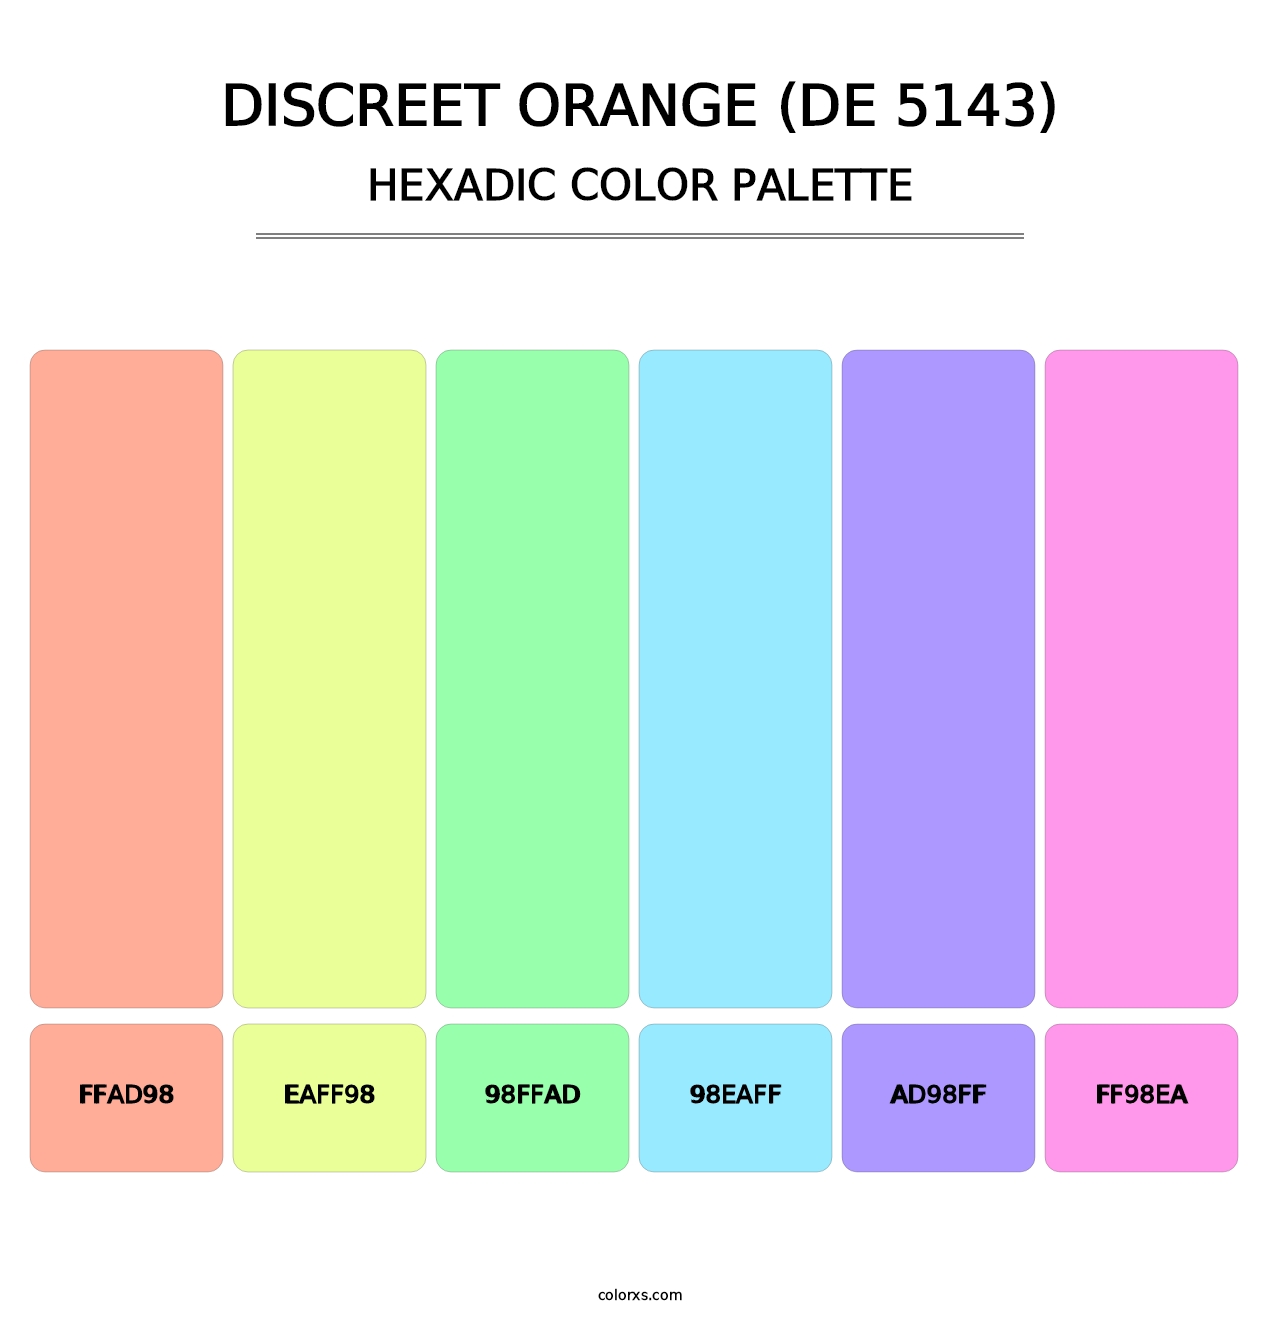 Discreet Orange (DE 5143) - Hexadic Color Palette